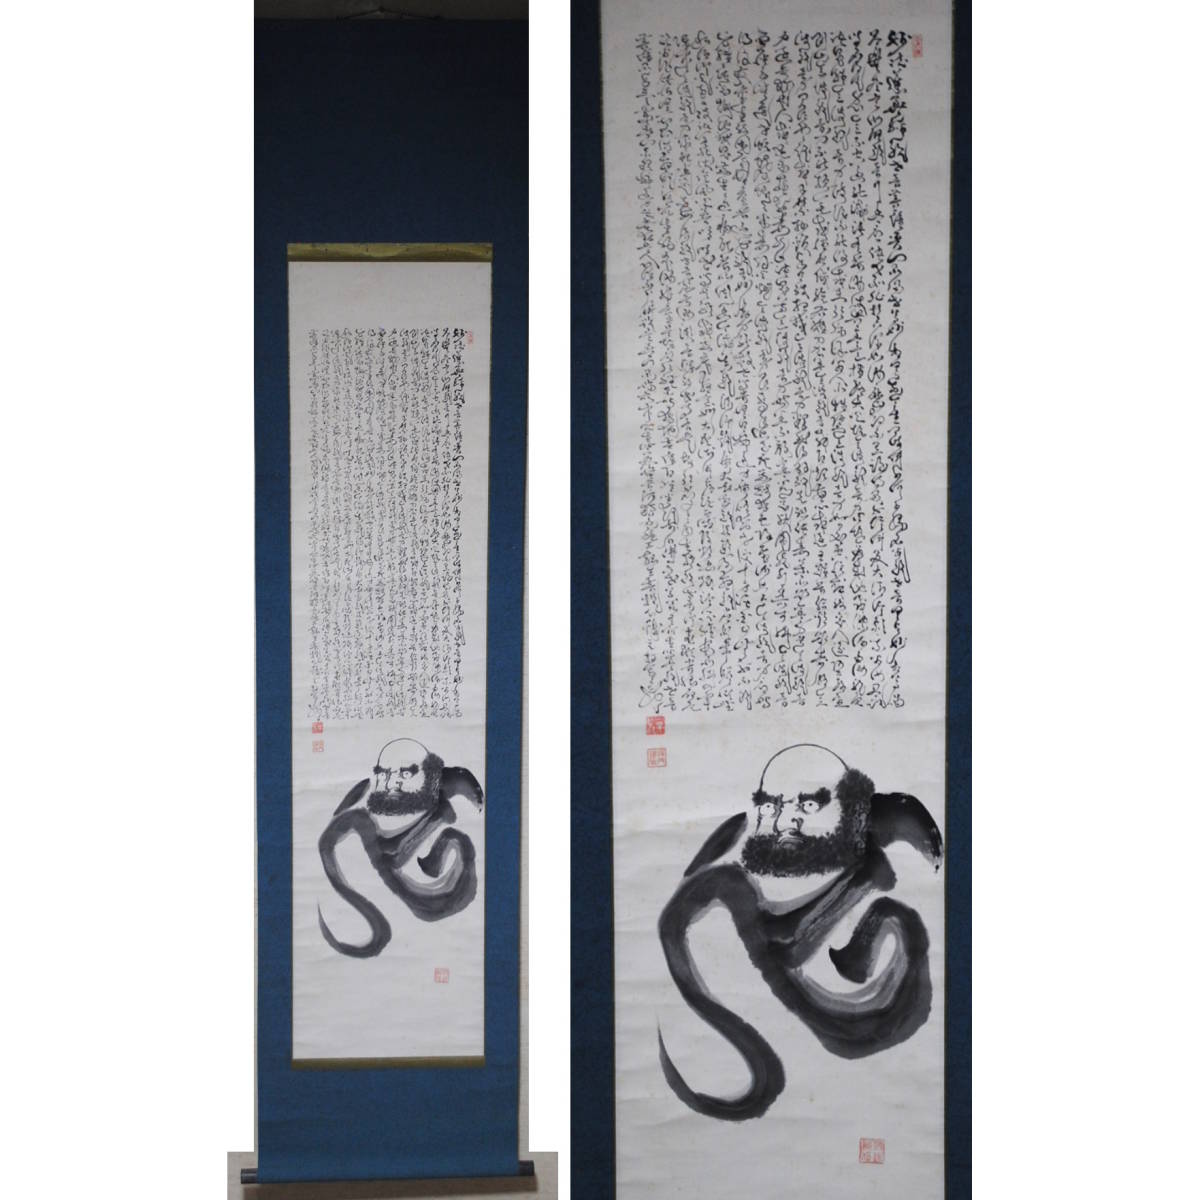 [Tienda de venta] Pergamino colgante, Bodhidharma, pintura budista, Sagrada Escritura, arte budista, caligrafía, pergamino colgante, de una antigua colección familiar, Cuadro, pintura japonesa, persona, Bodhisattva